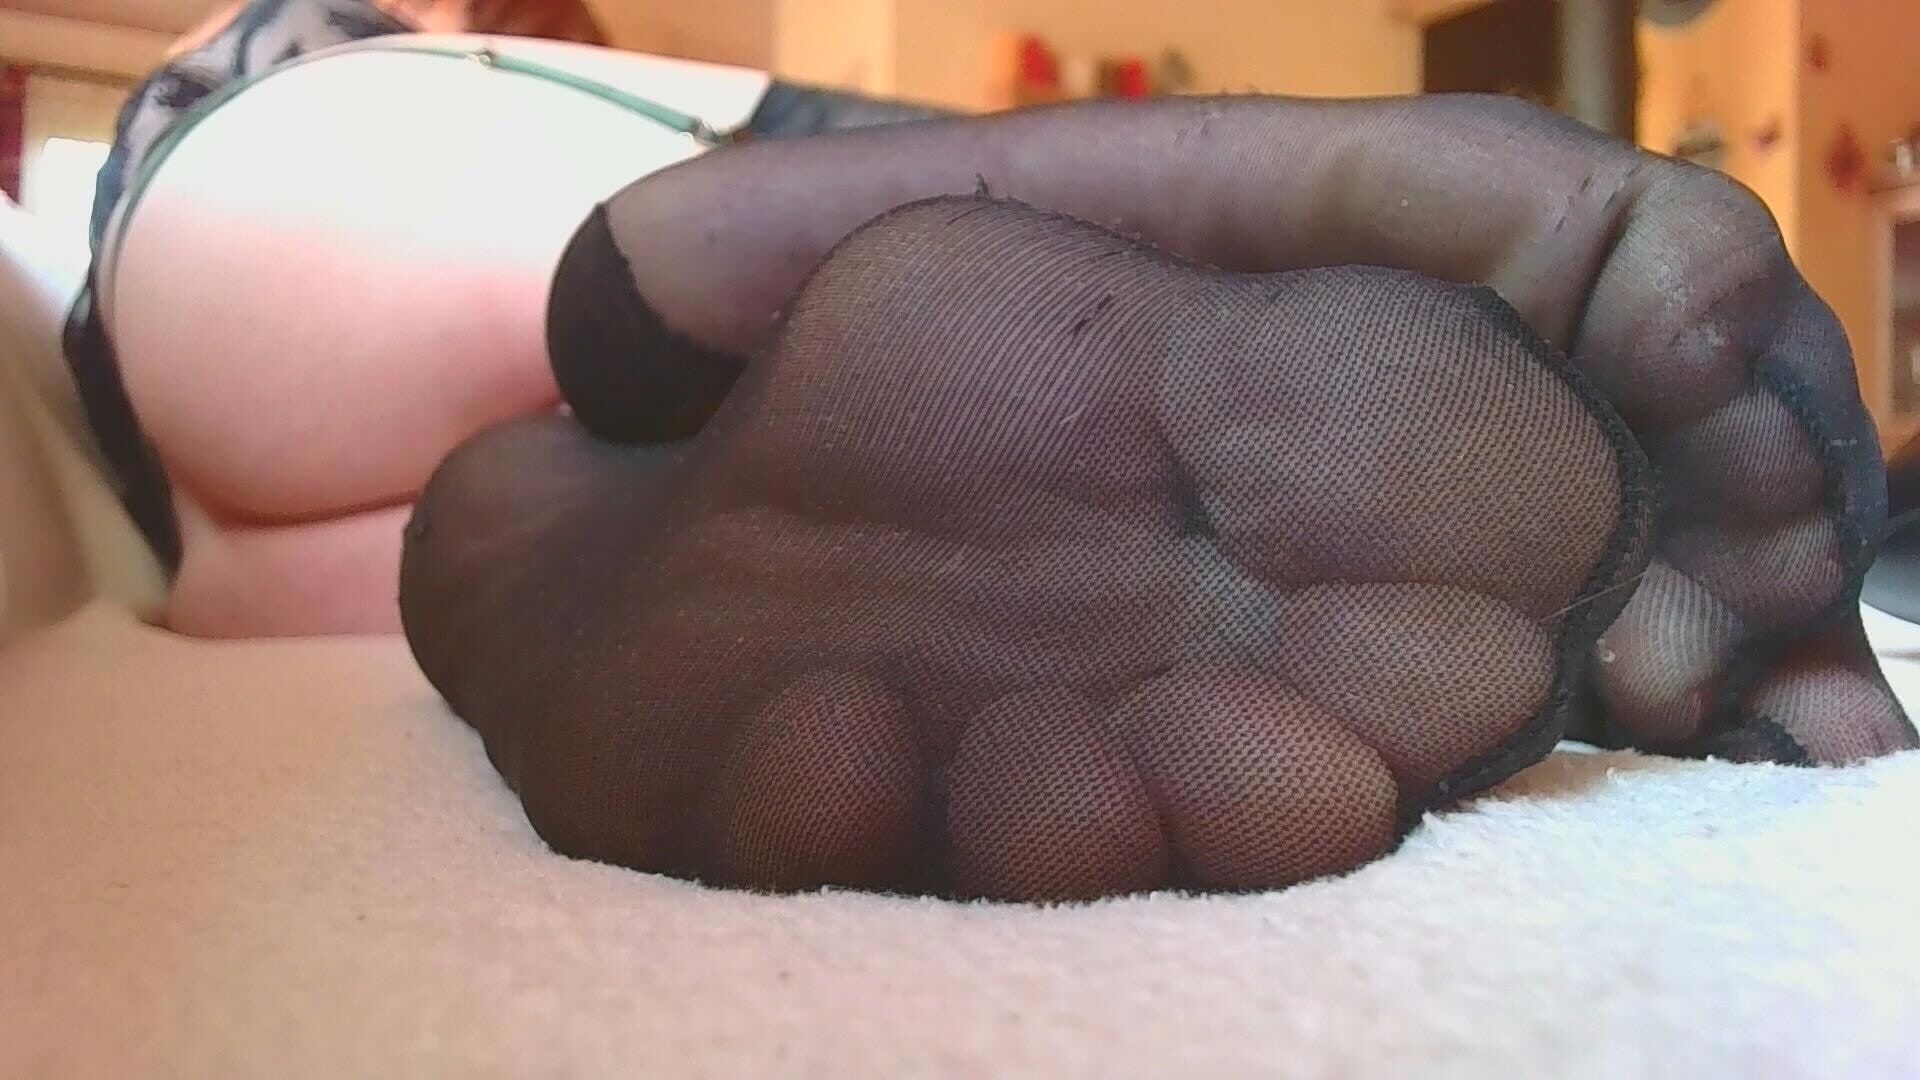 My feet #2